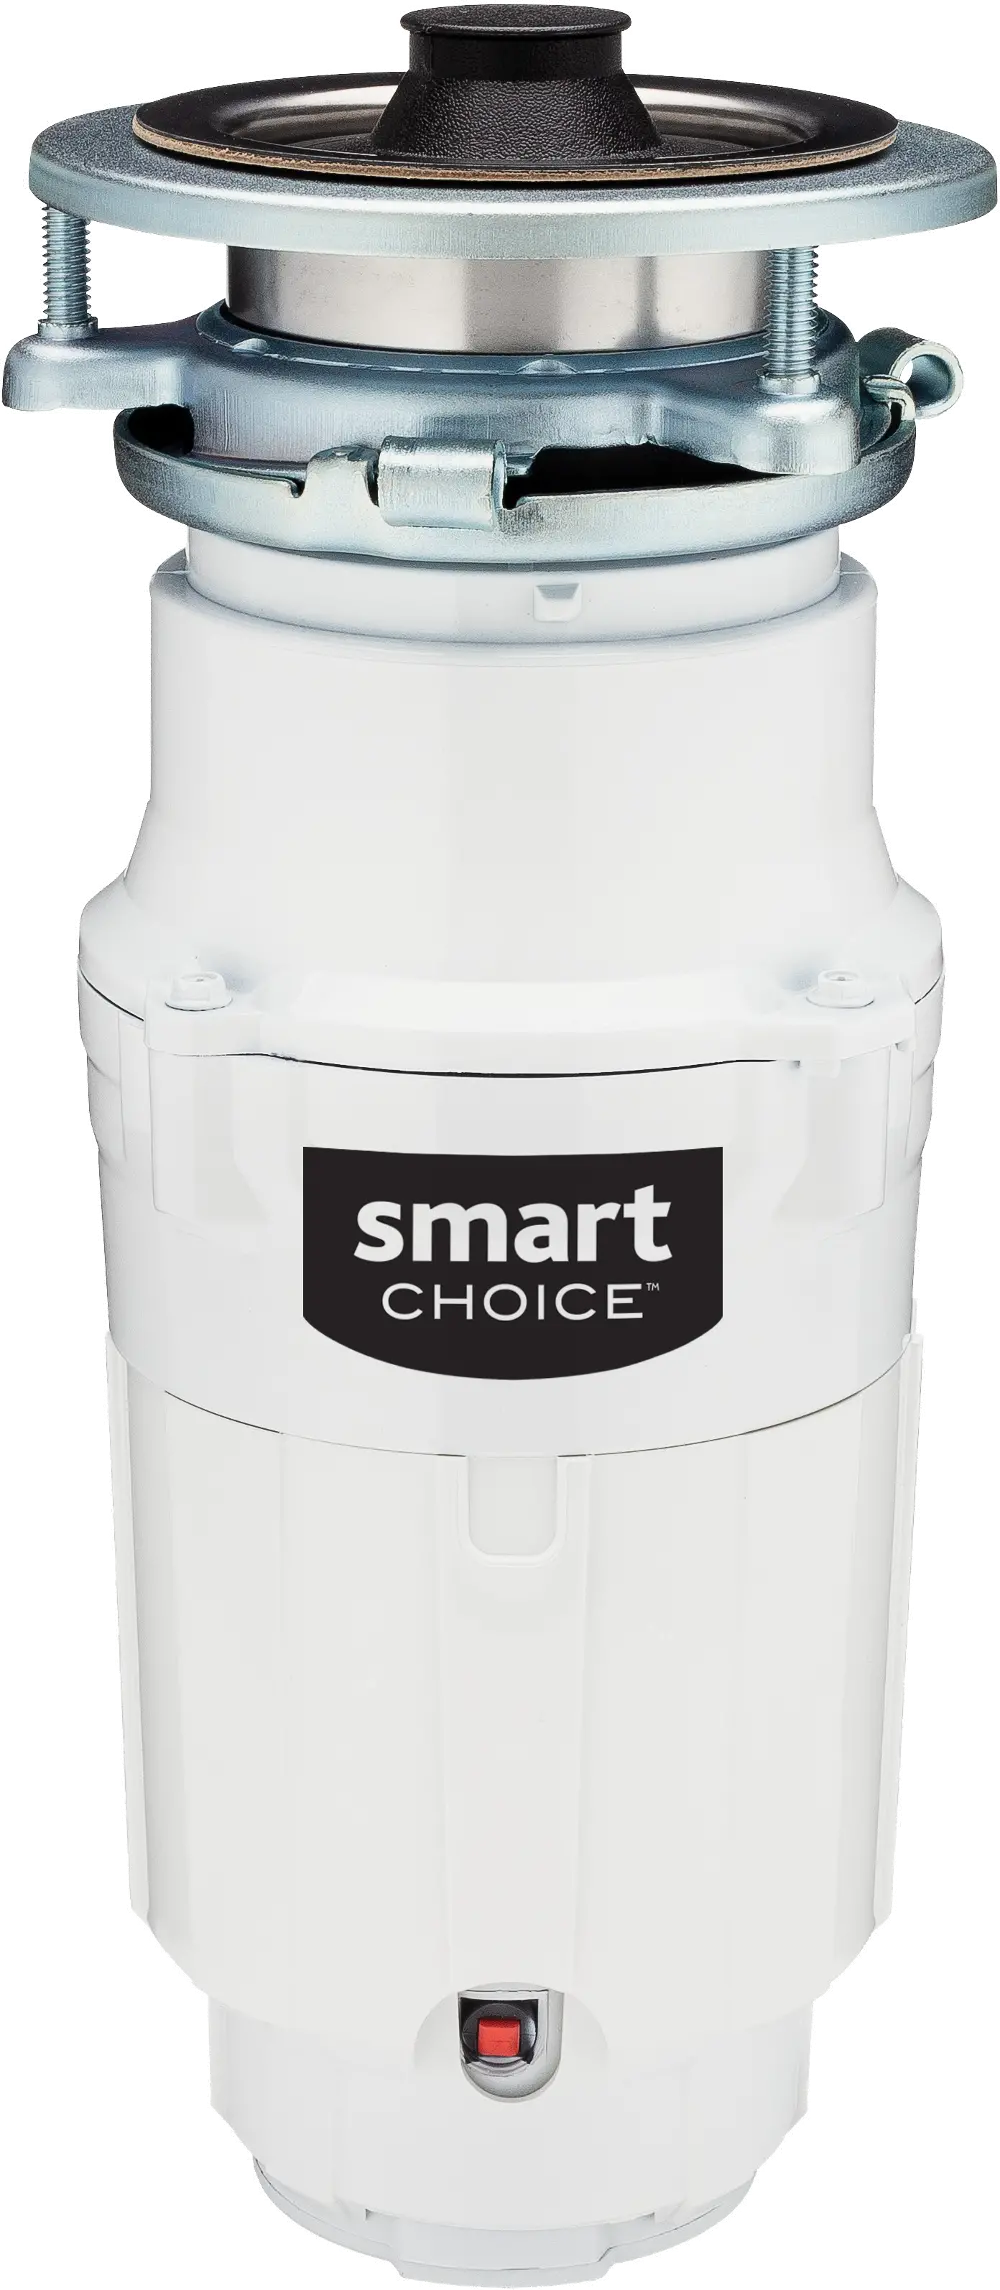 SC05DISPD1 Frigidaire Smart Choice Food Disposal - 1/2 HP, White-1